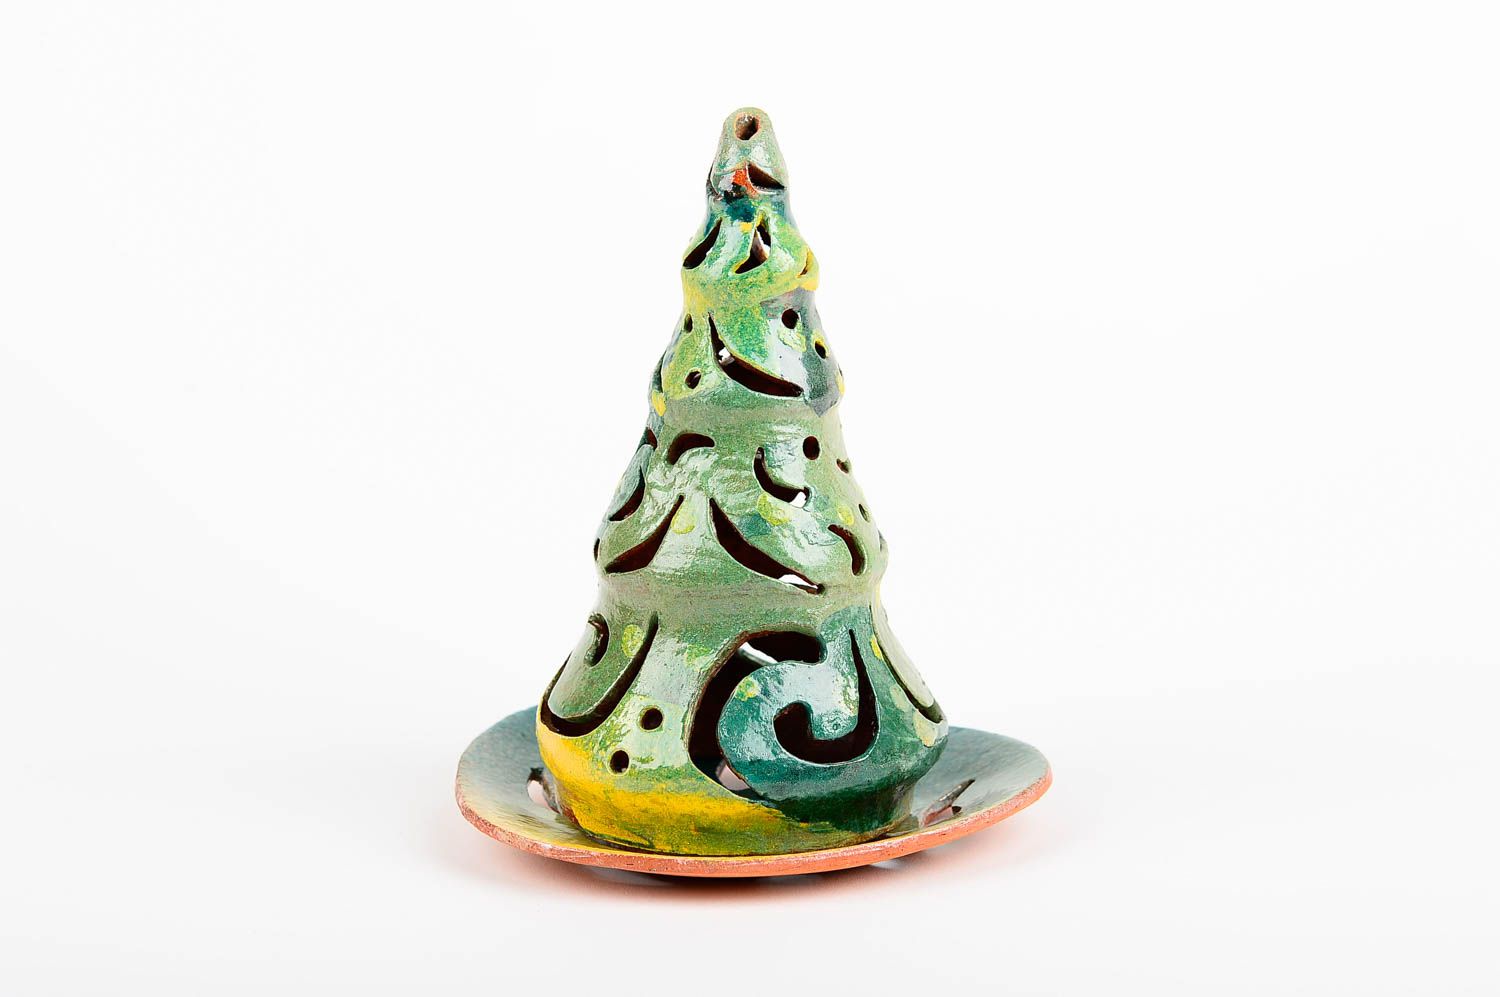 Ceramic tea light light-glow Christmas tree candle holder 5,9 inches, 0,43 lb photo 1